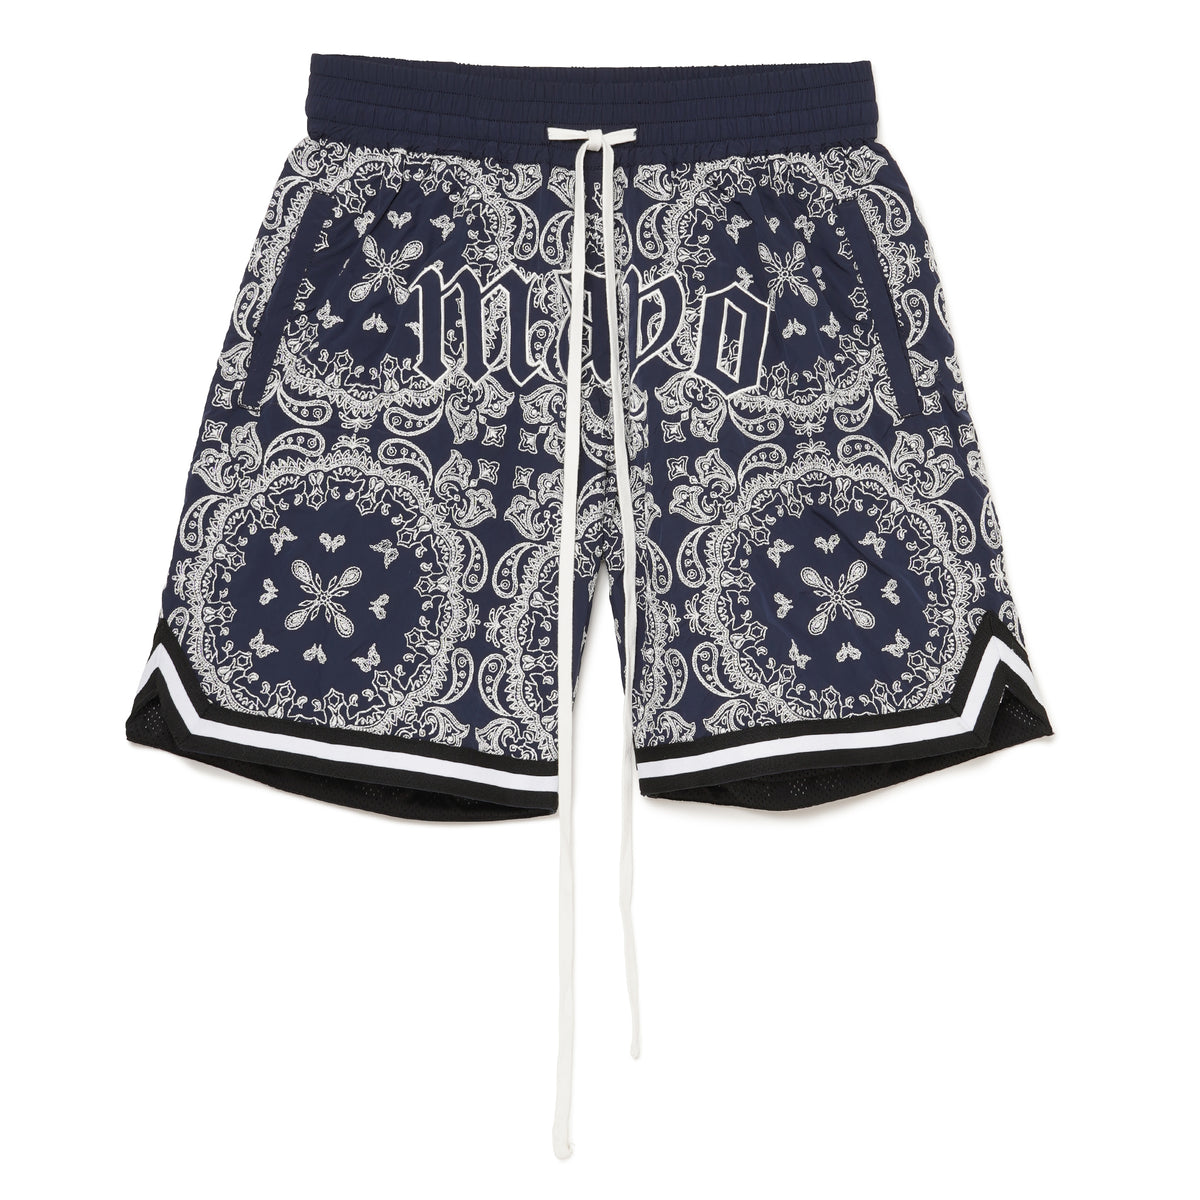 MAYO Paisley Embroidery Shorts - BLUE